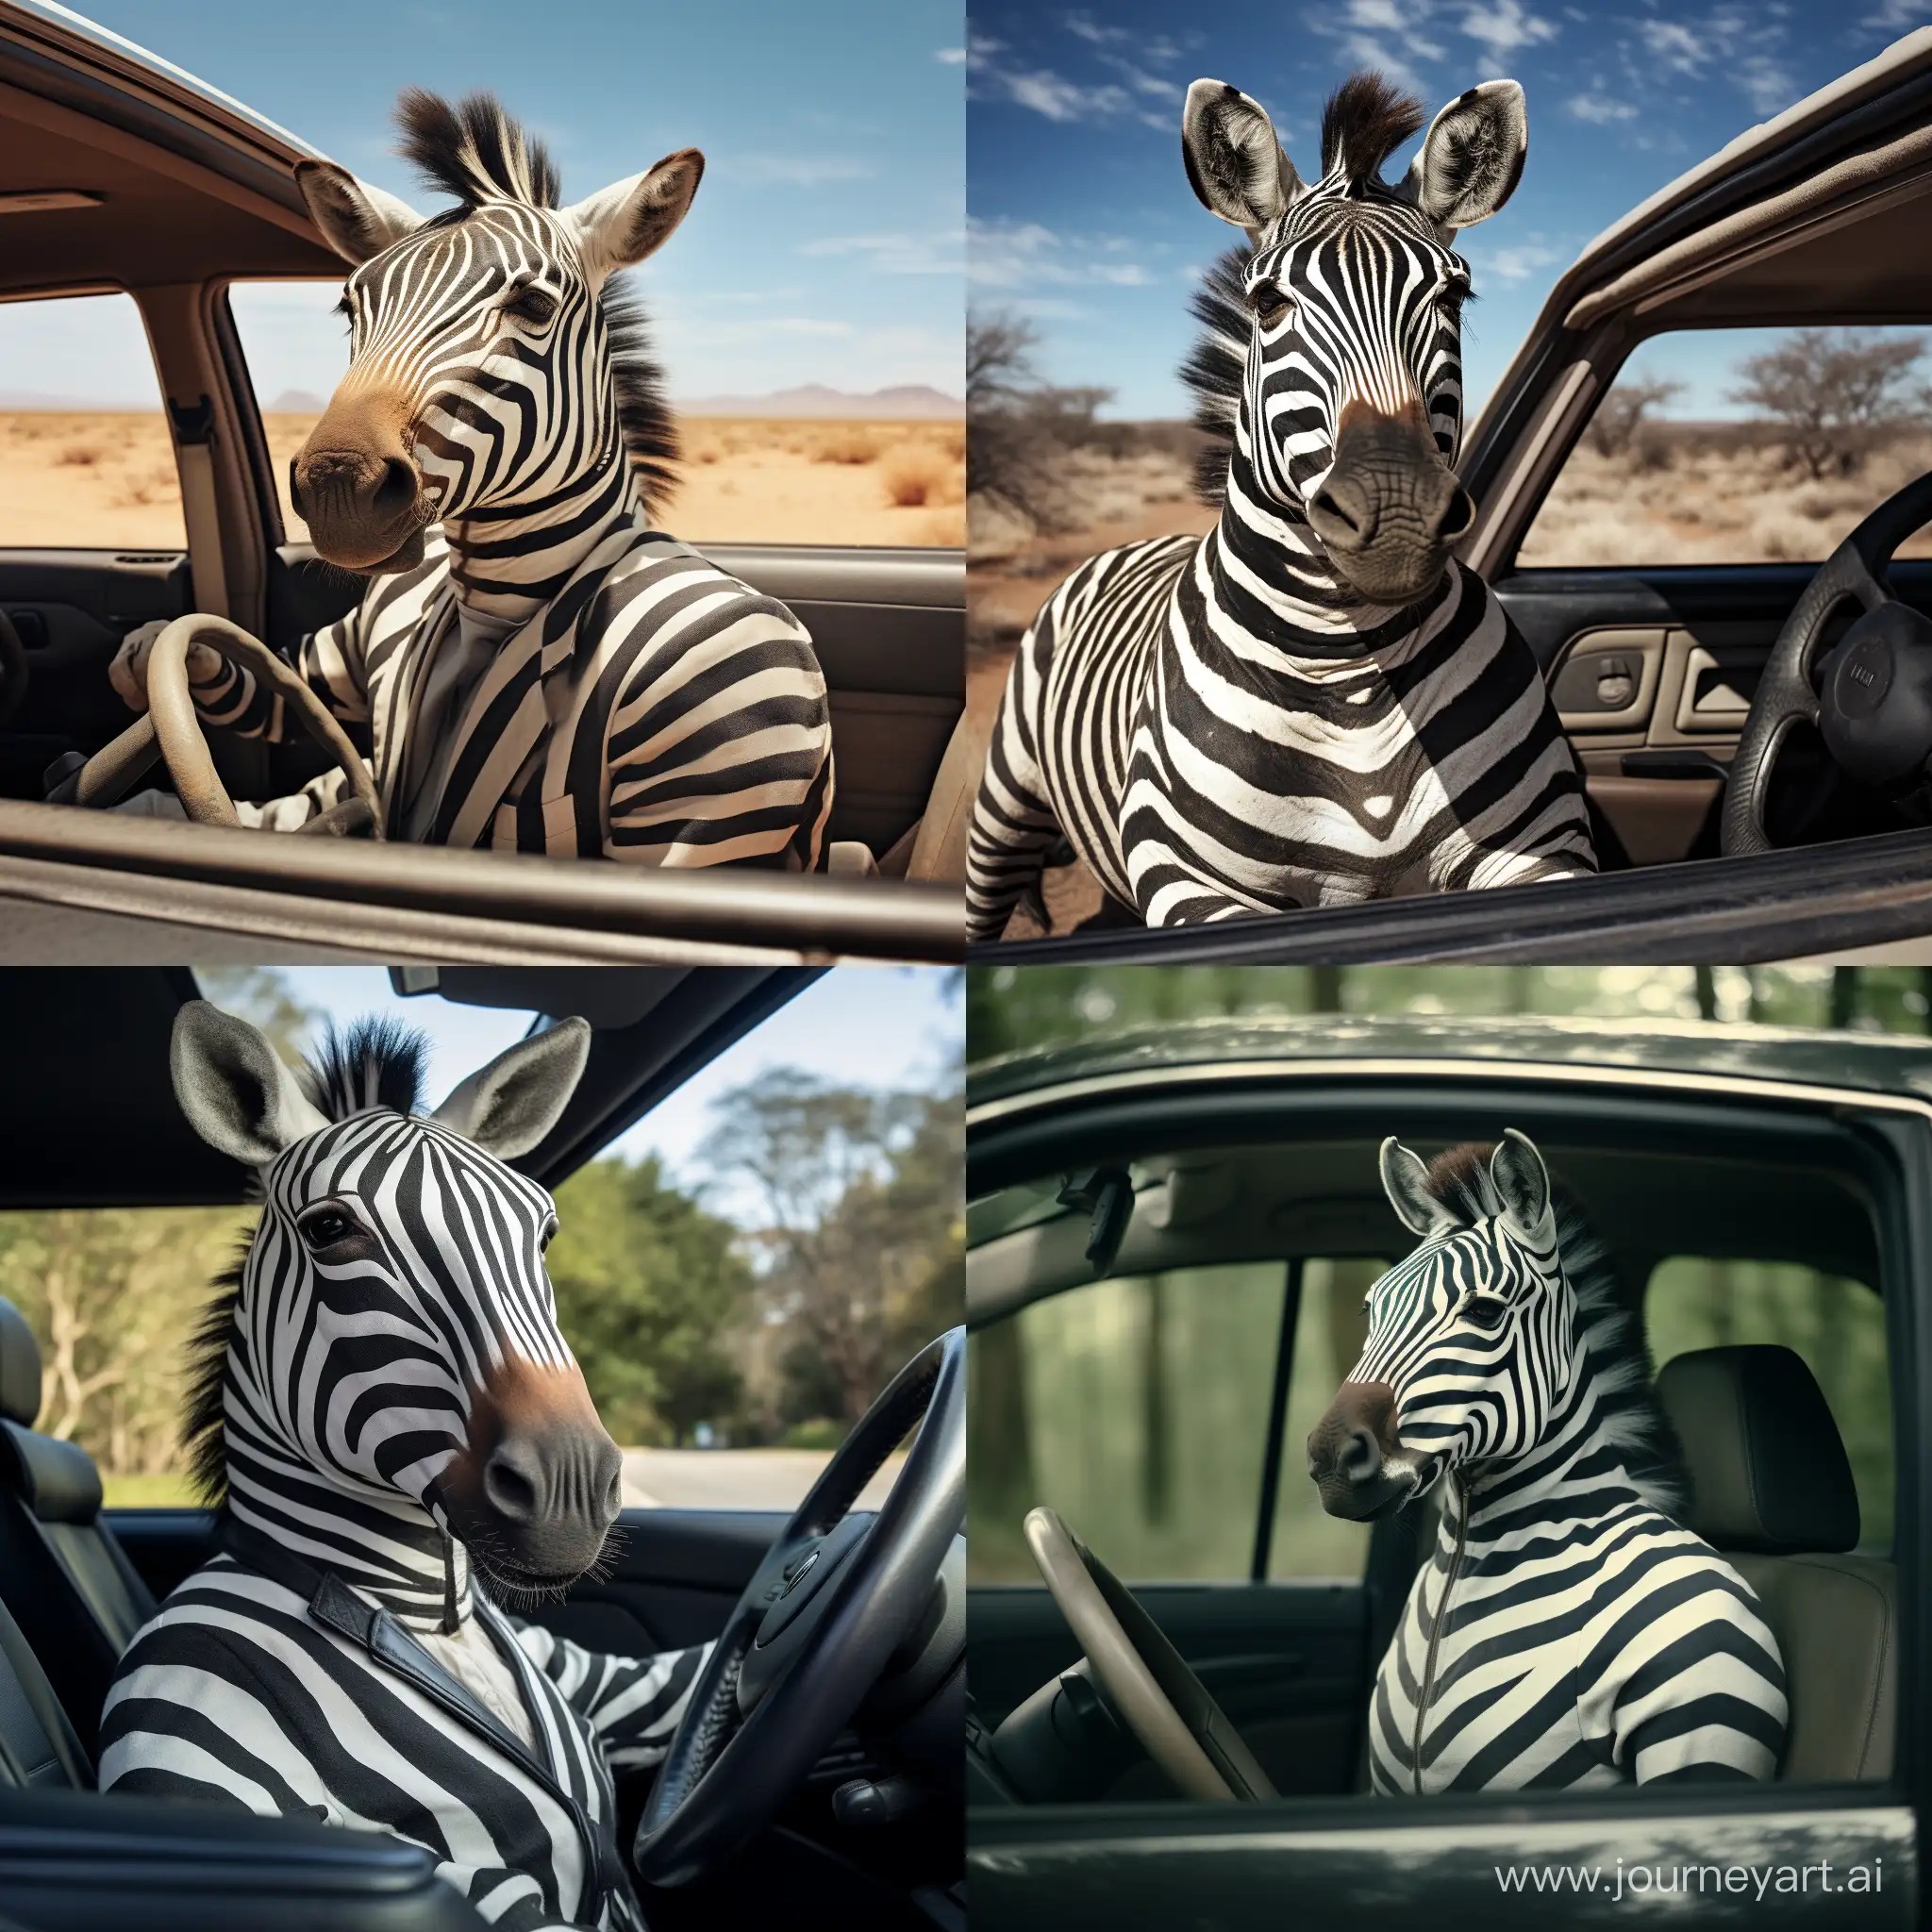 Zebra-Driving-Car-Art-Quirky-Animal-Transportation-Illustration